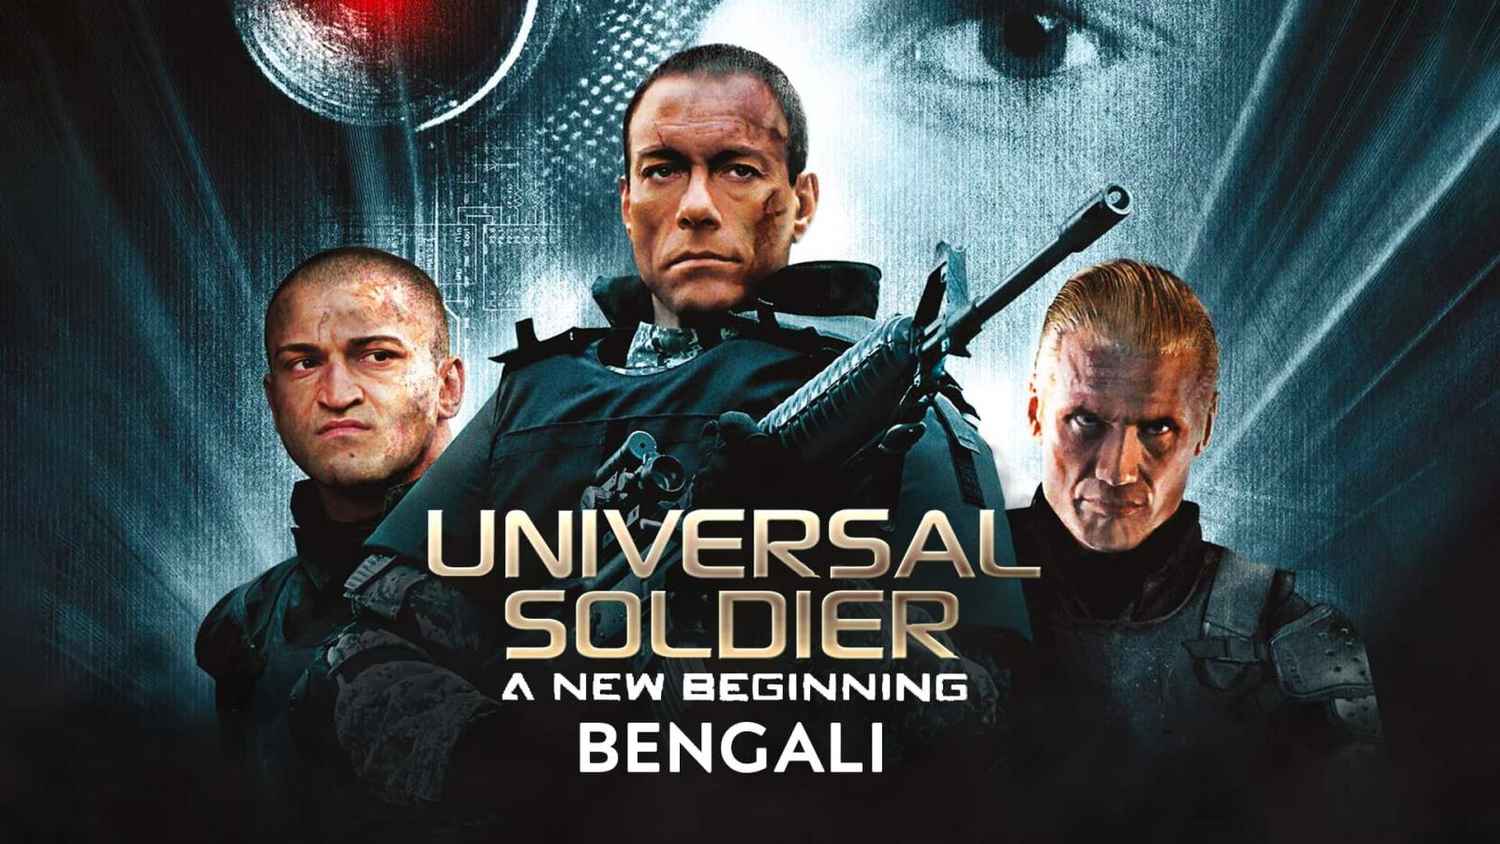 Universal Soldier: A New Beginning